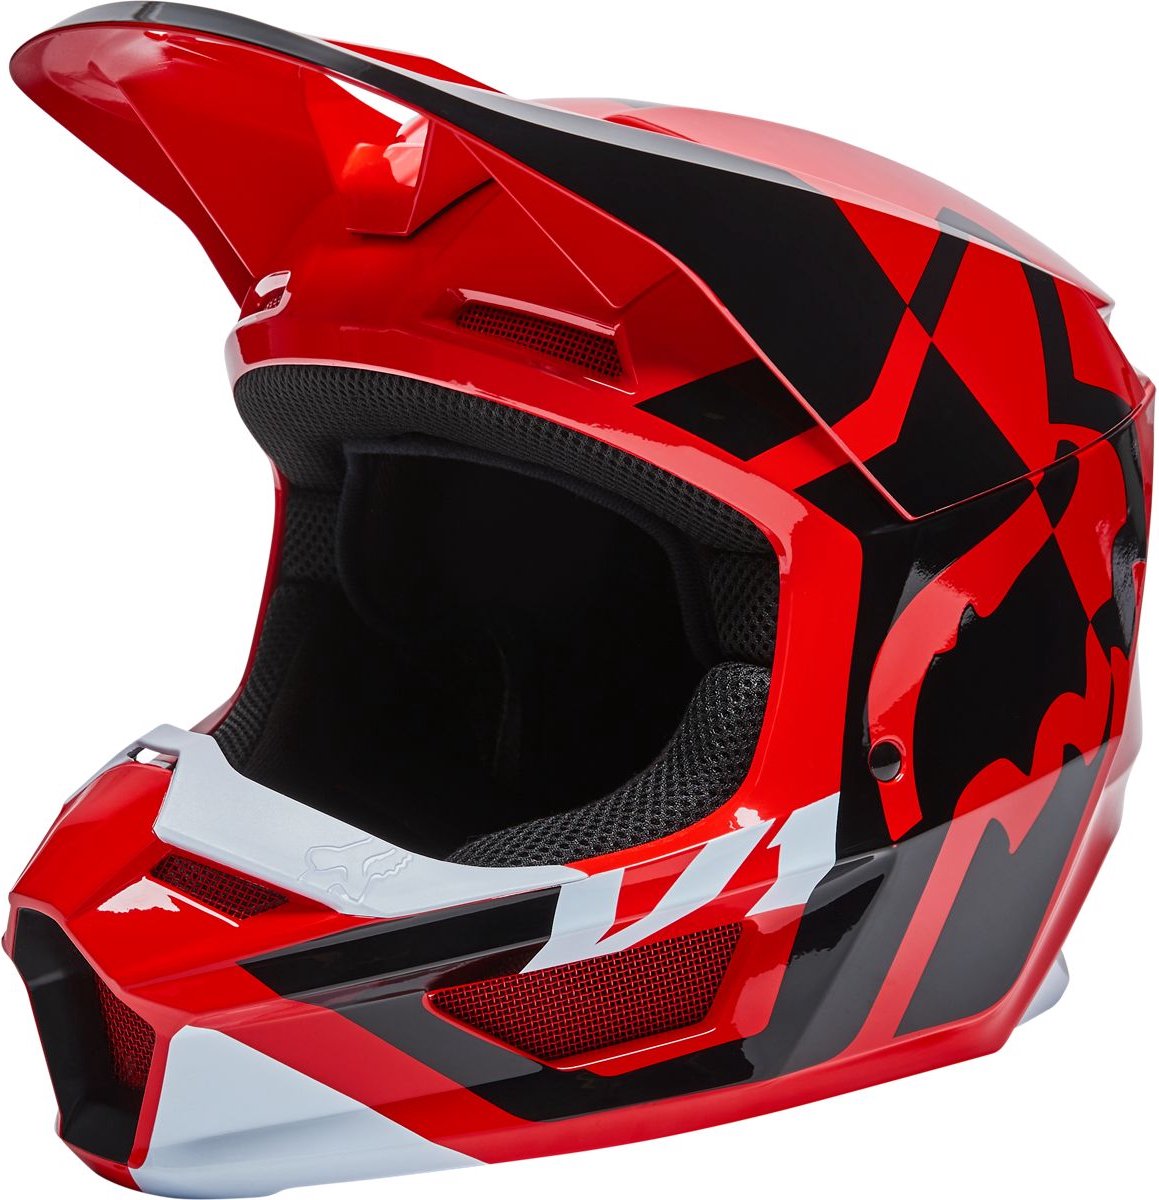 Fox Racing - V1 Lux - Crosshelm Scooter Motocross Helm - Rood - Medium (57-58cm)